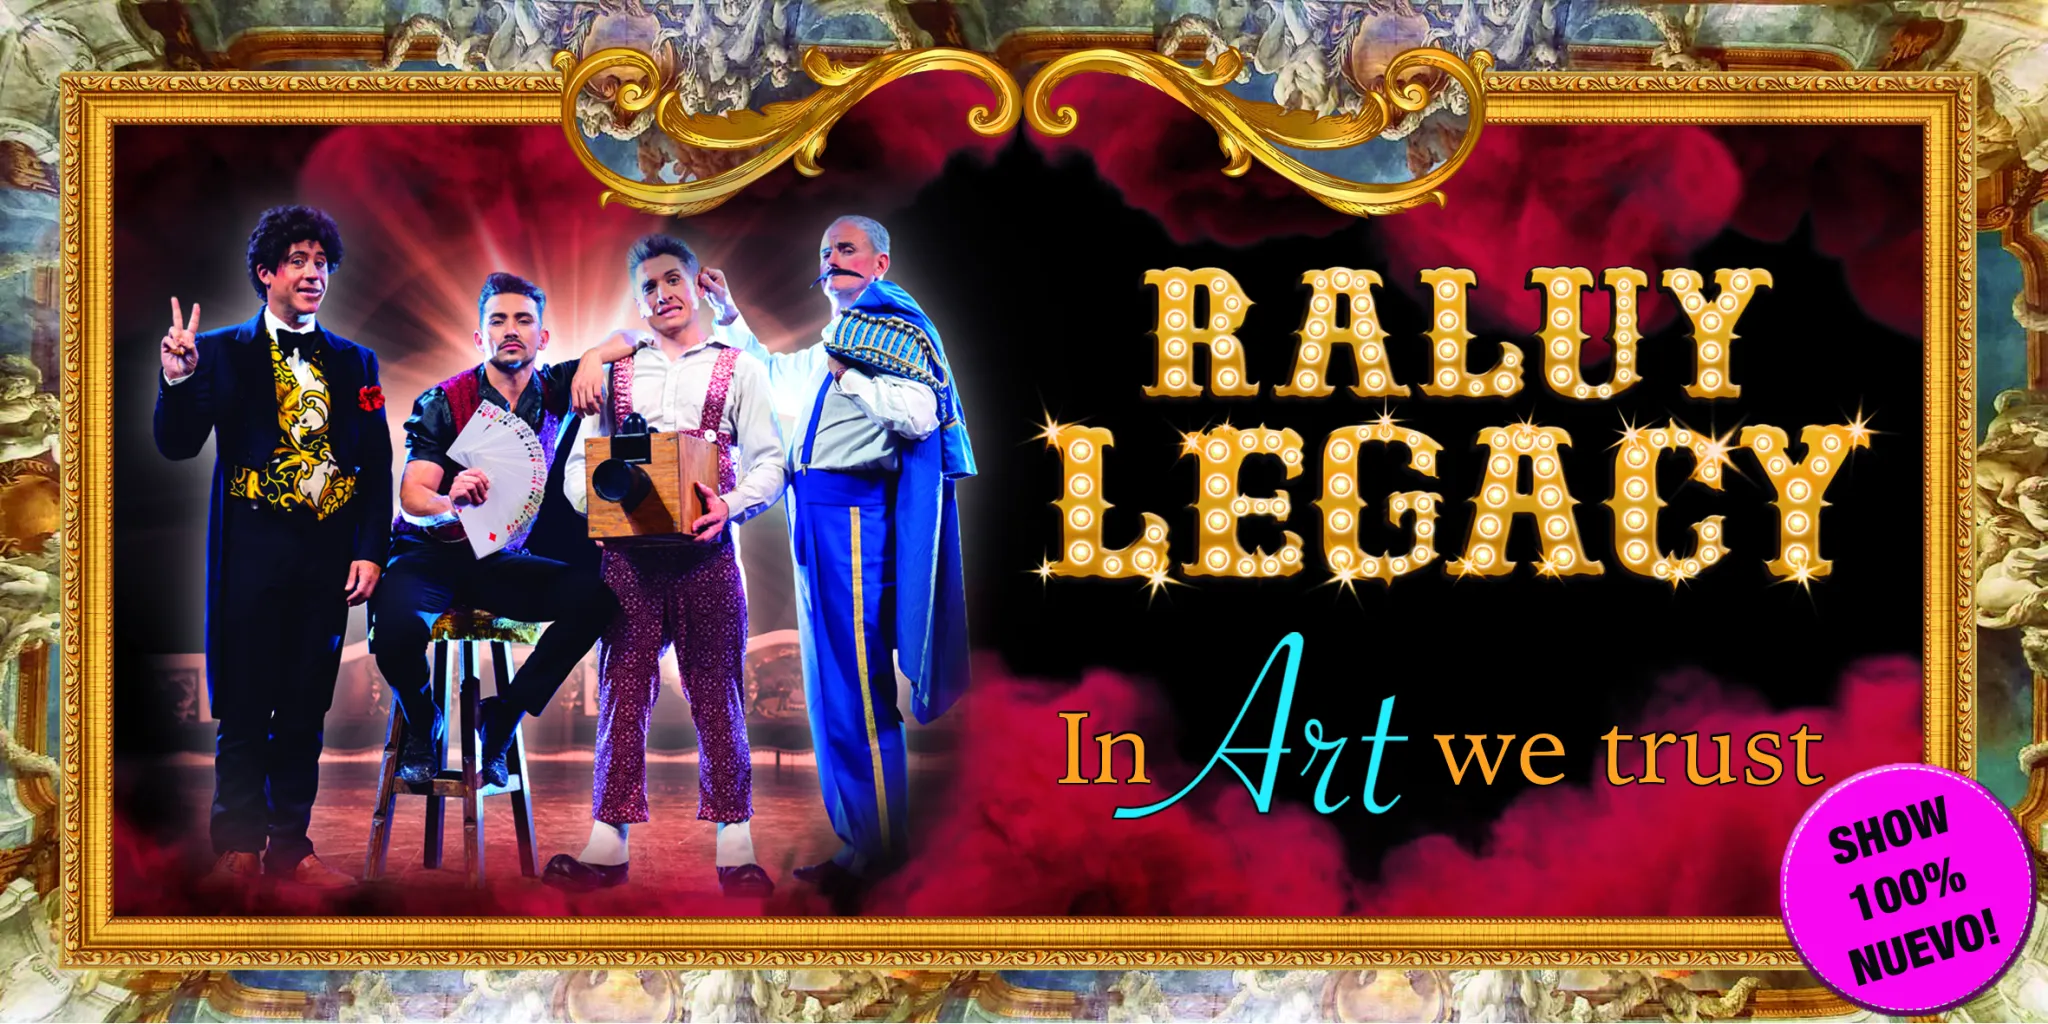 Circus Raluy Legacy